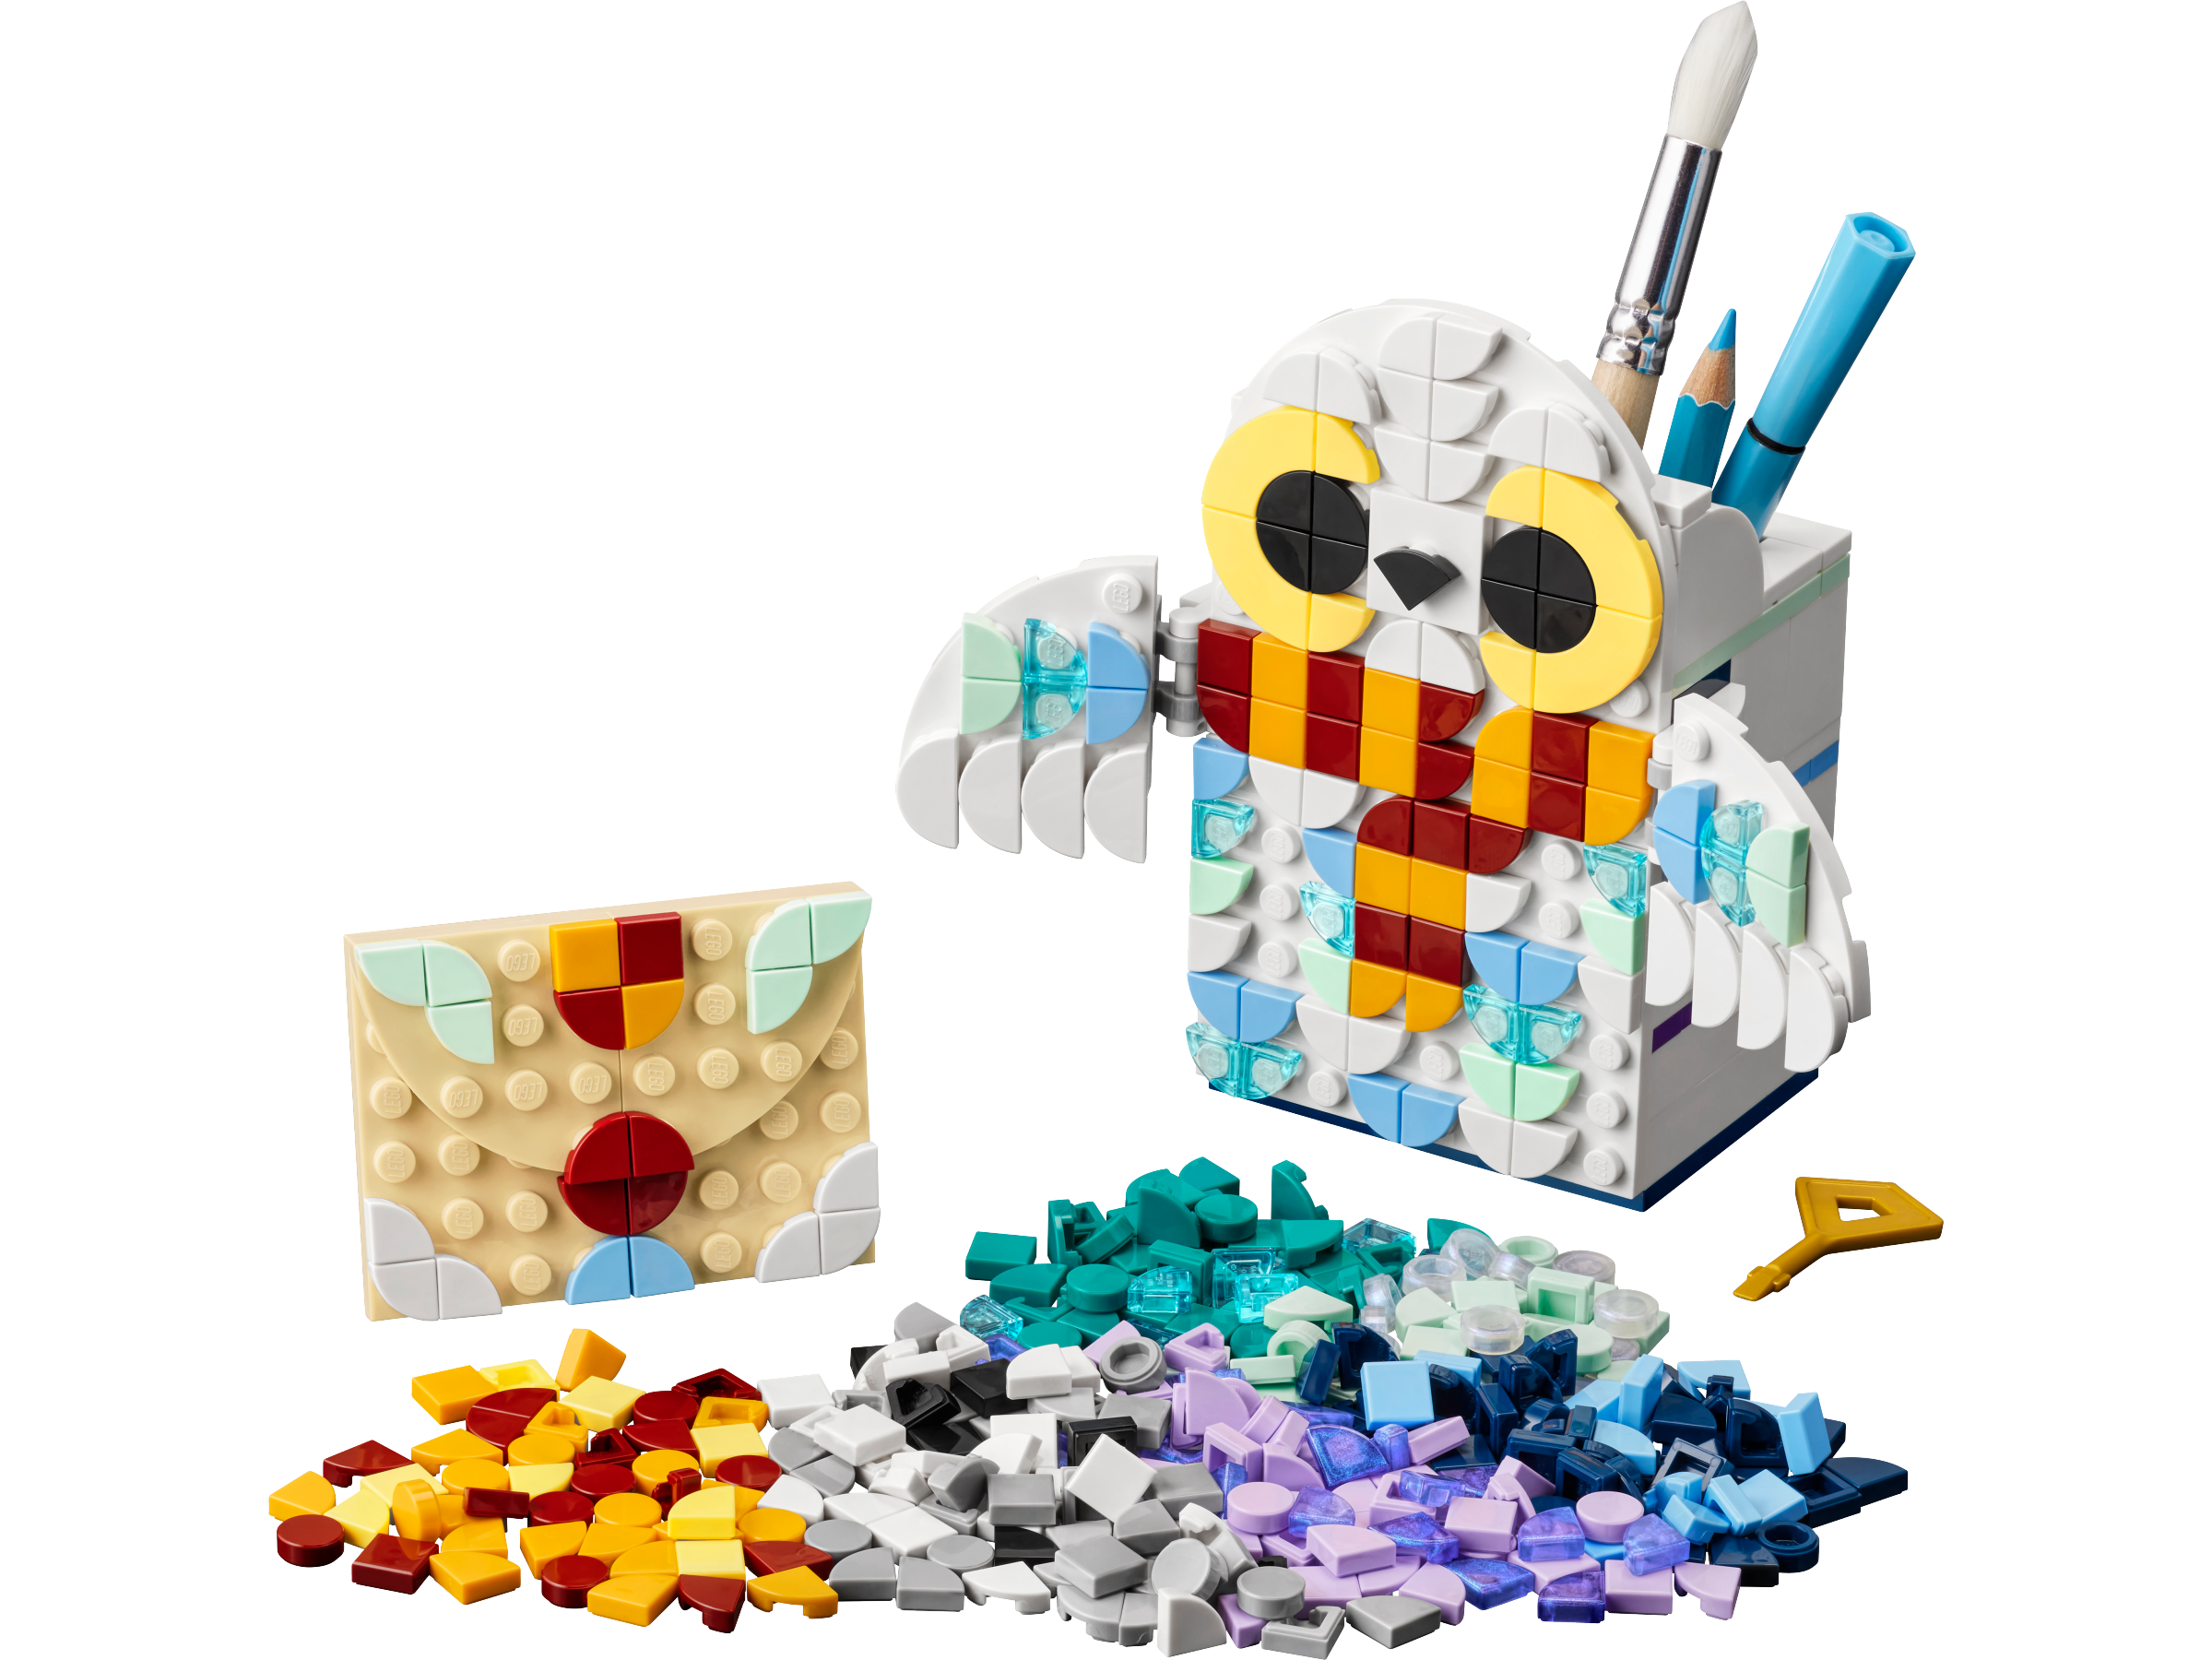 LEGO® DOTS 41809 Hedwig™ Stiftehalter